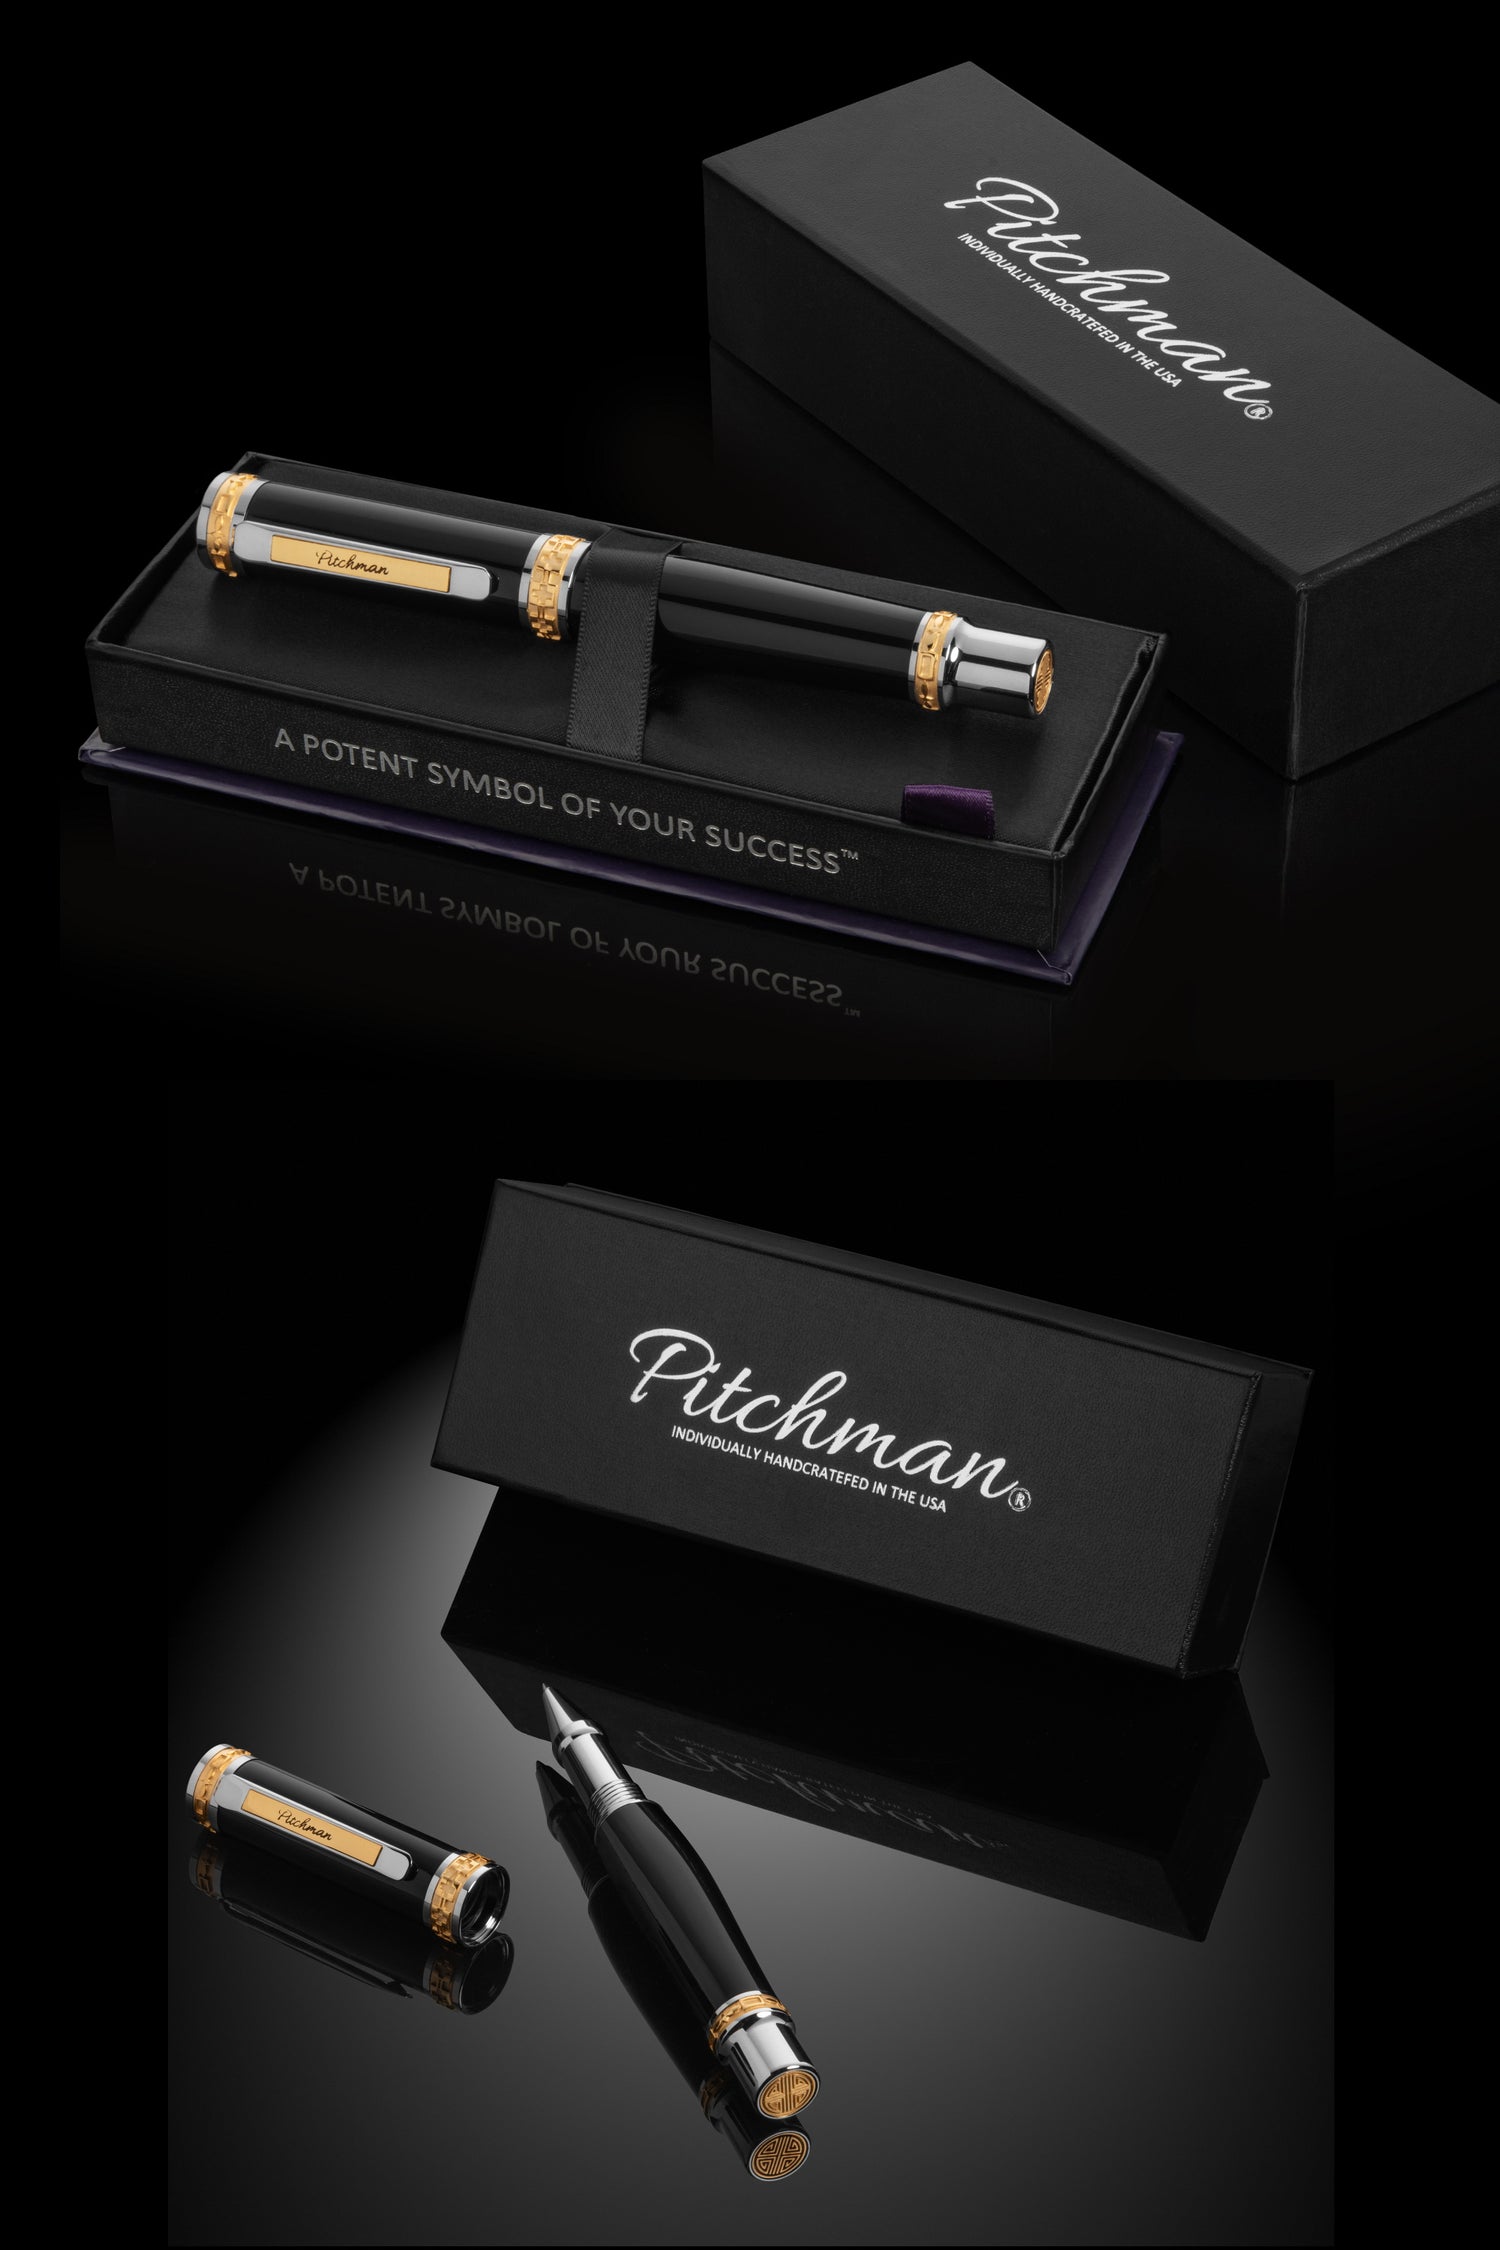 Candumy Black Gift Ballpoint Pen Set for Men,Stainless Steel Fancy Pens Twist to Open Retractable Classic Design Golden Trim,Executive Business Pens